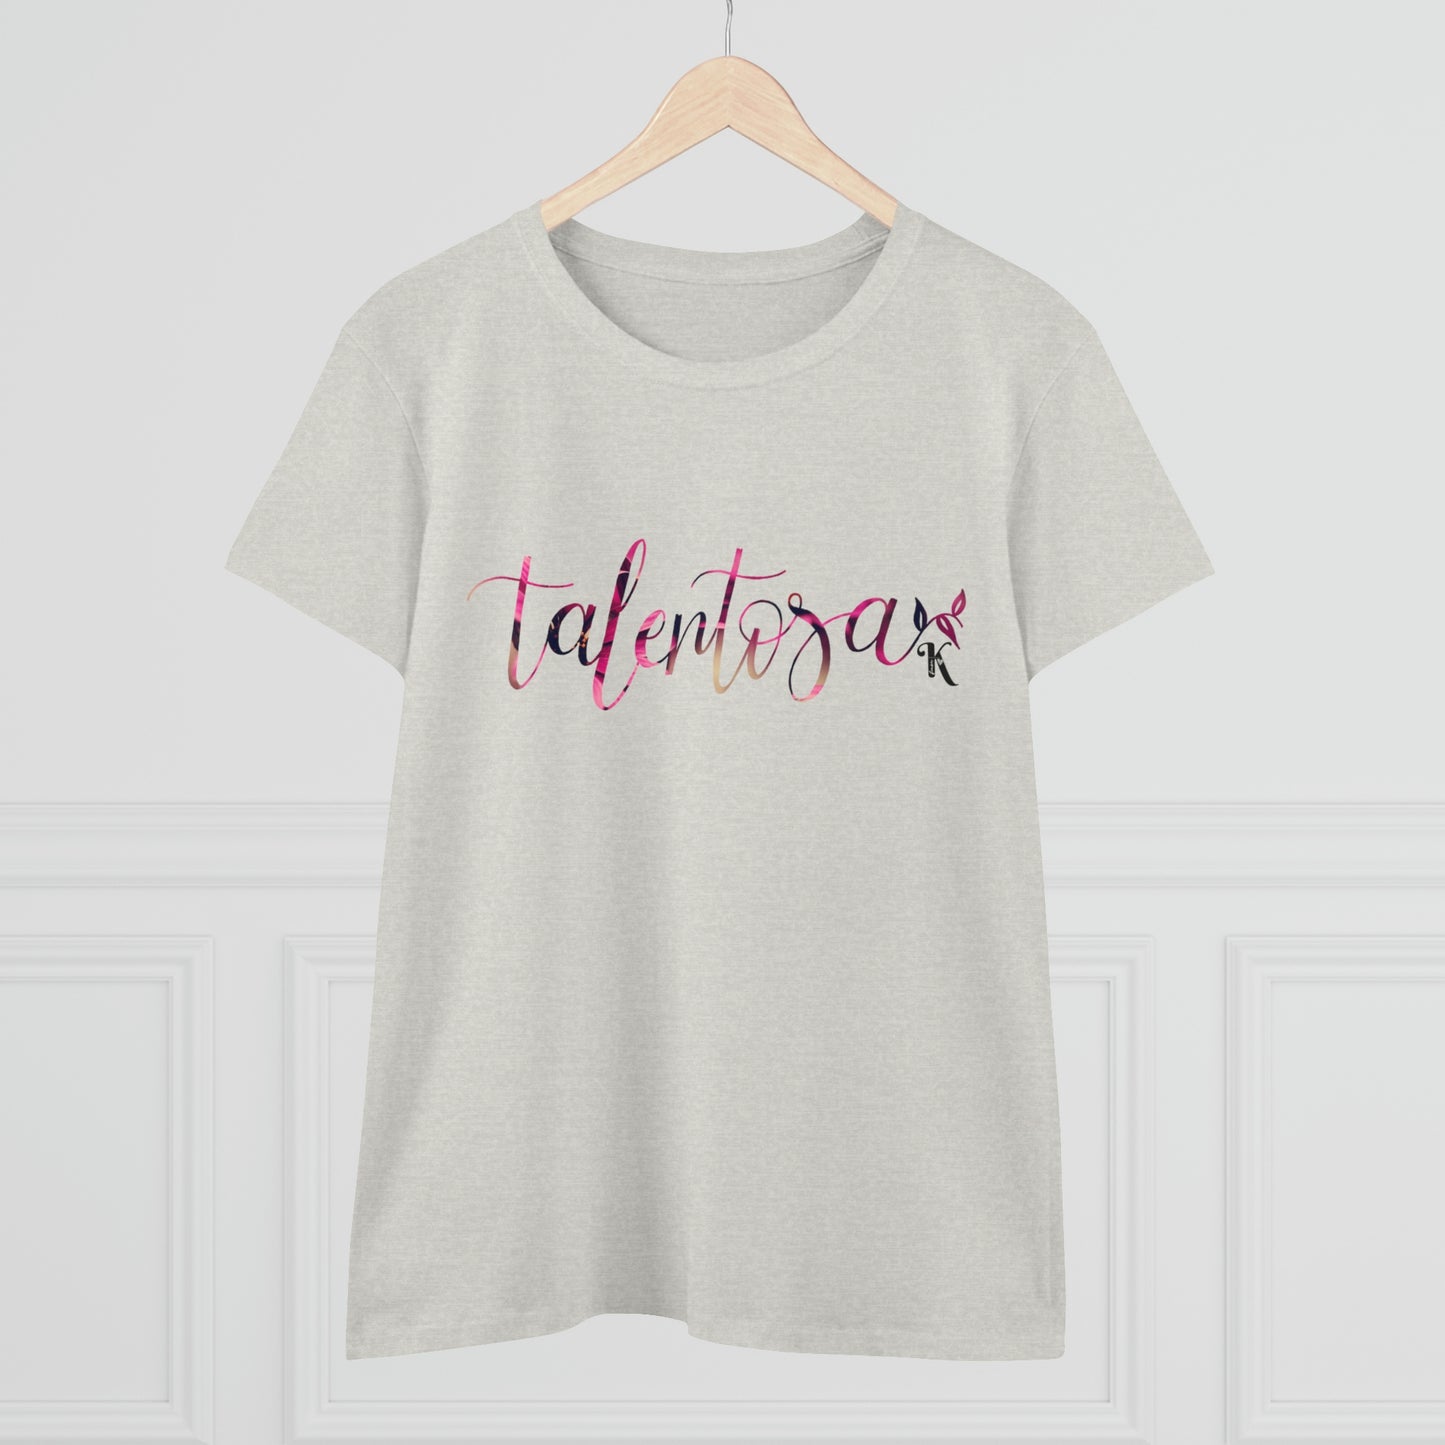 Talentosa p31.17 > Women's Midweight Cotton Tee / Camiseta de algodón para mujer (pink)